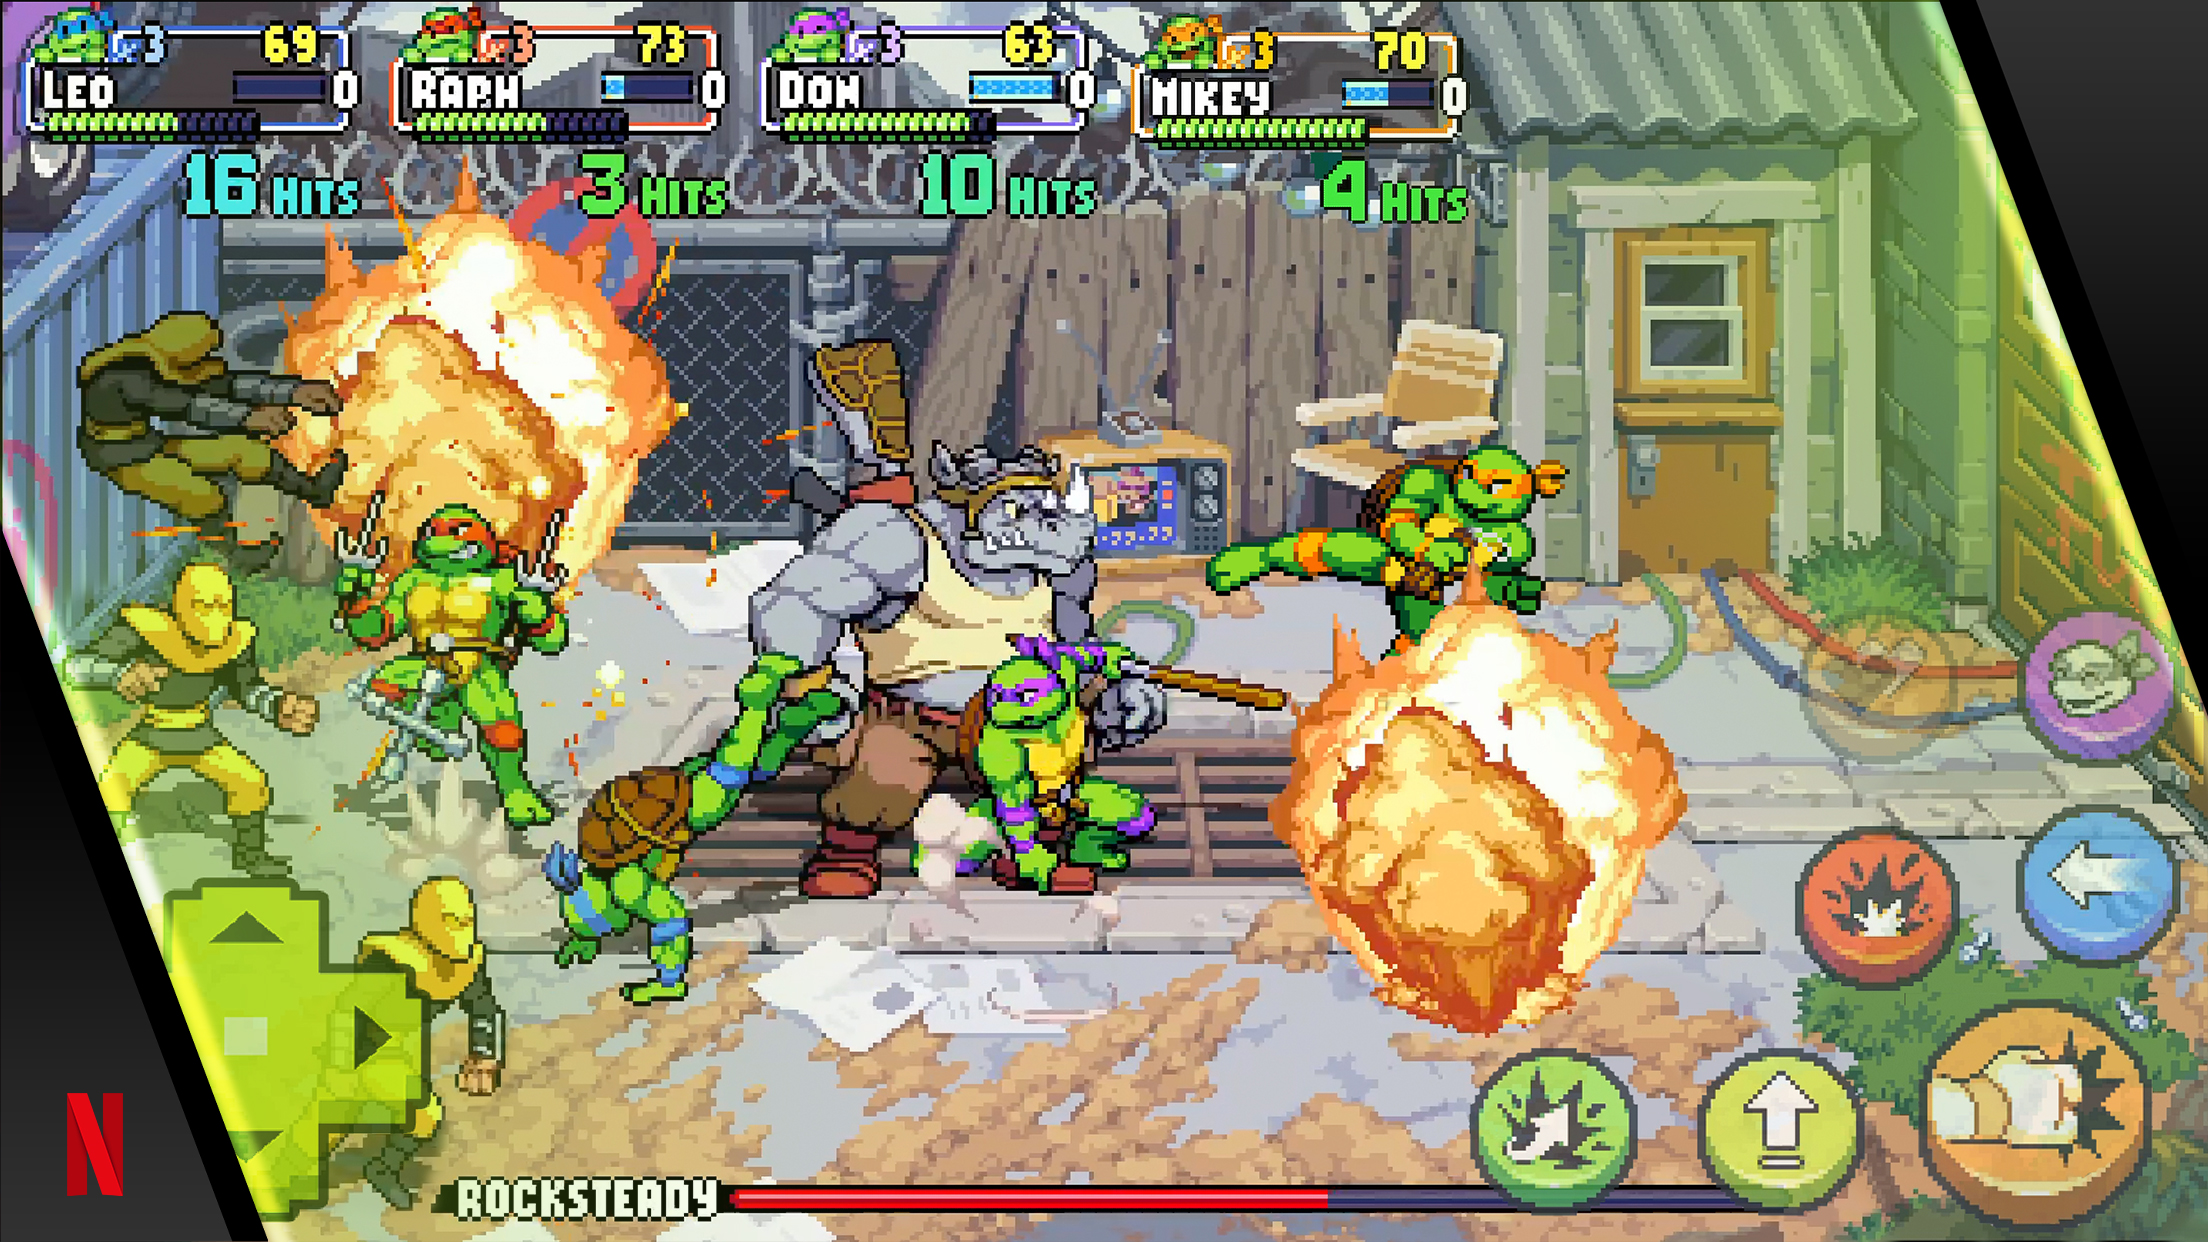 Las tortugas luchan contra Rocksteady en Teenage Mutant Ninja Turtles: Shredder's Revenge para dispositivos móviles.